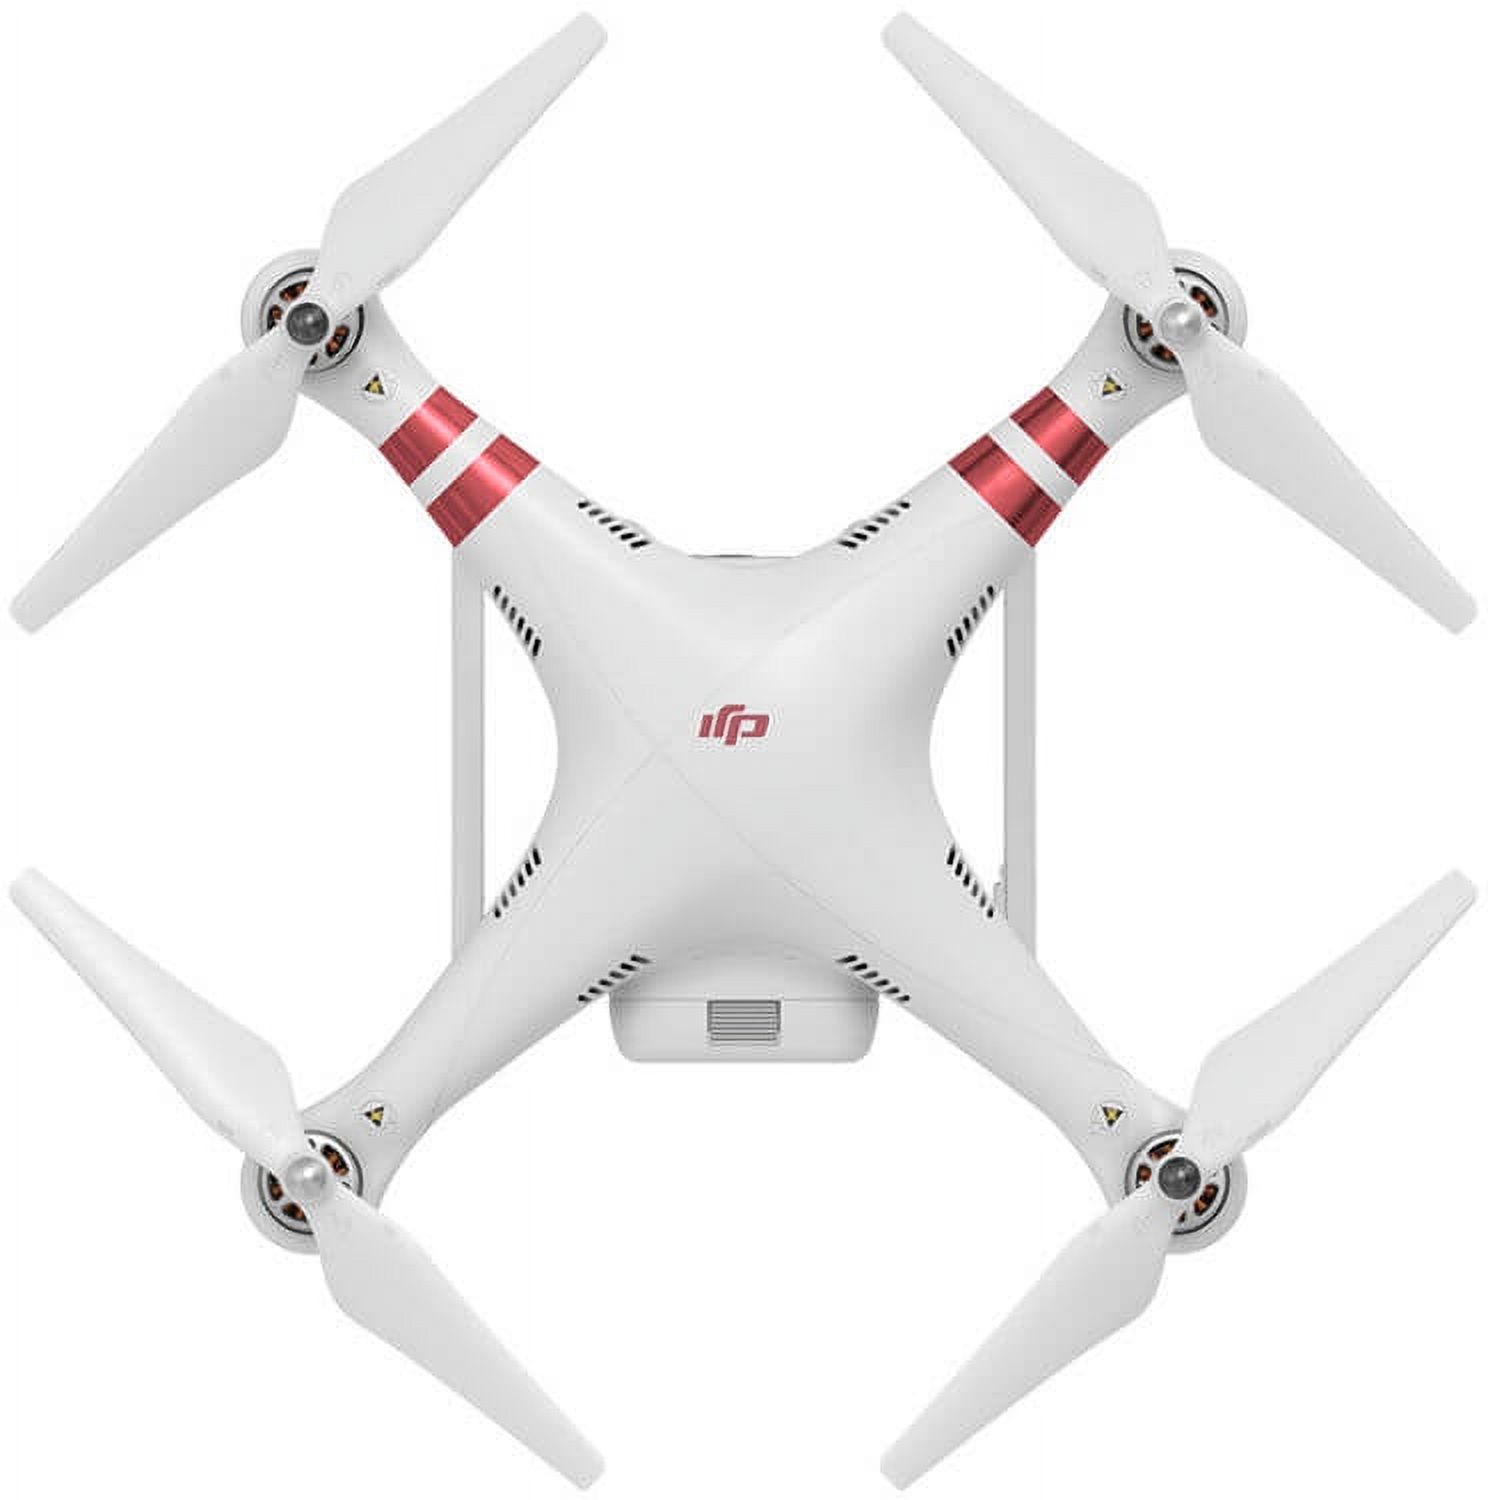 DJI Phantom 3 Standard Drone - image 3 of 3